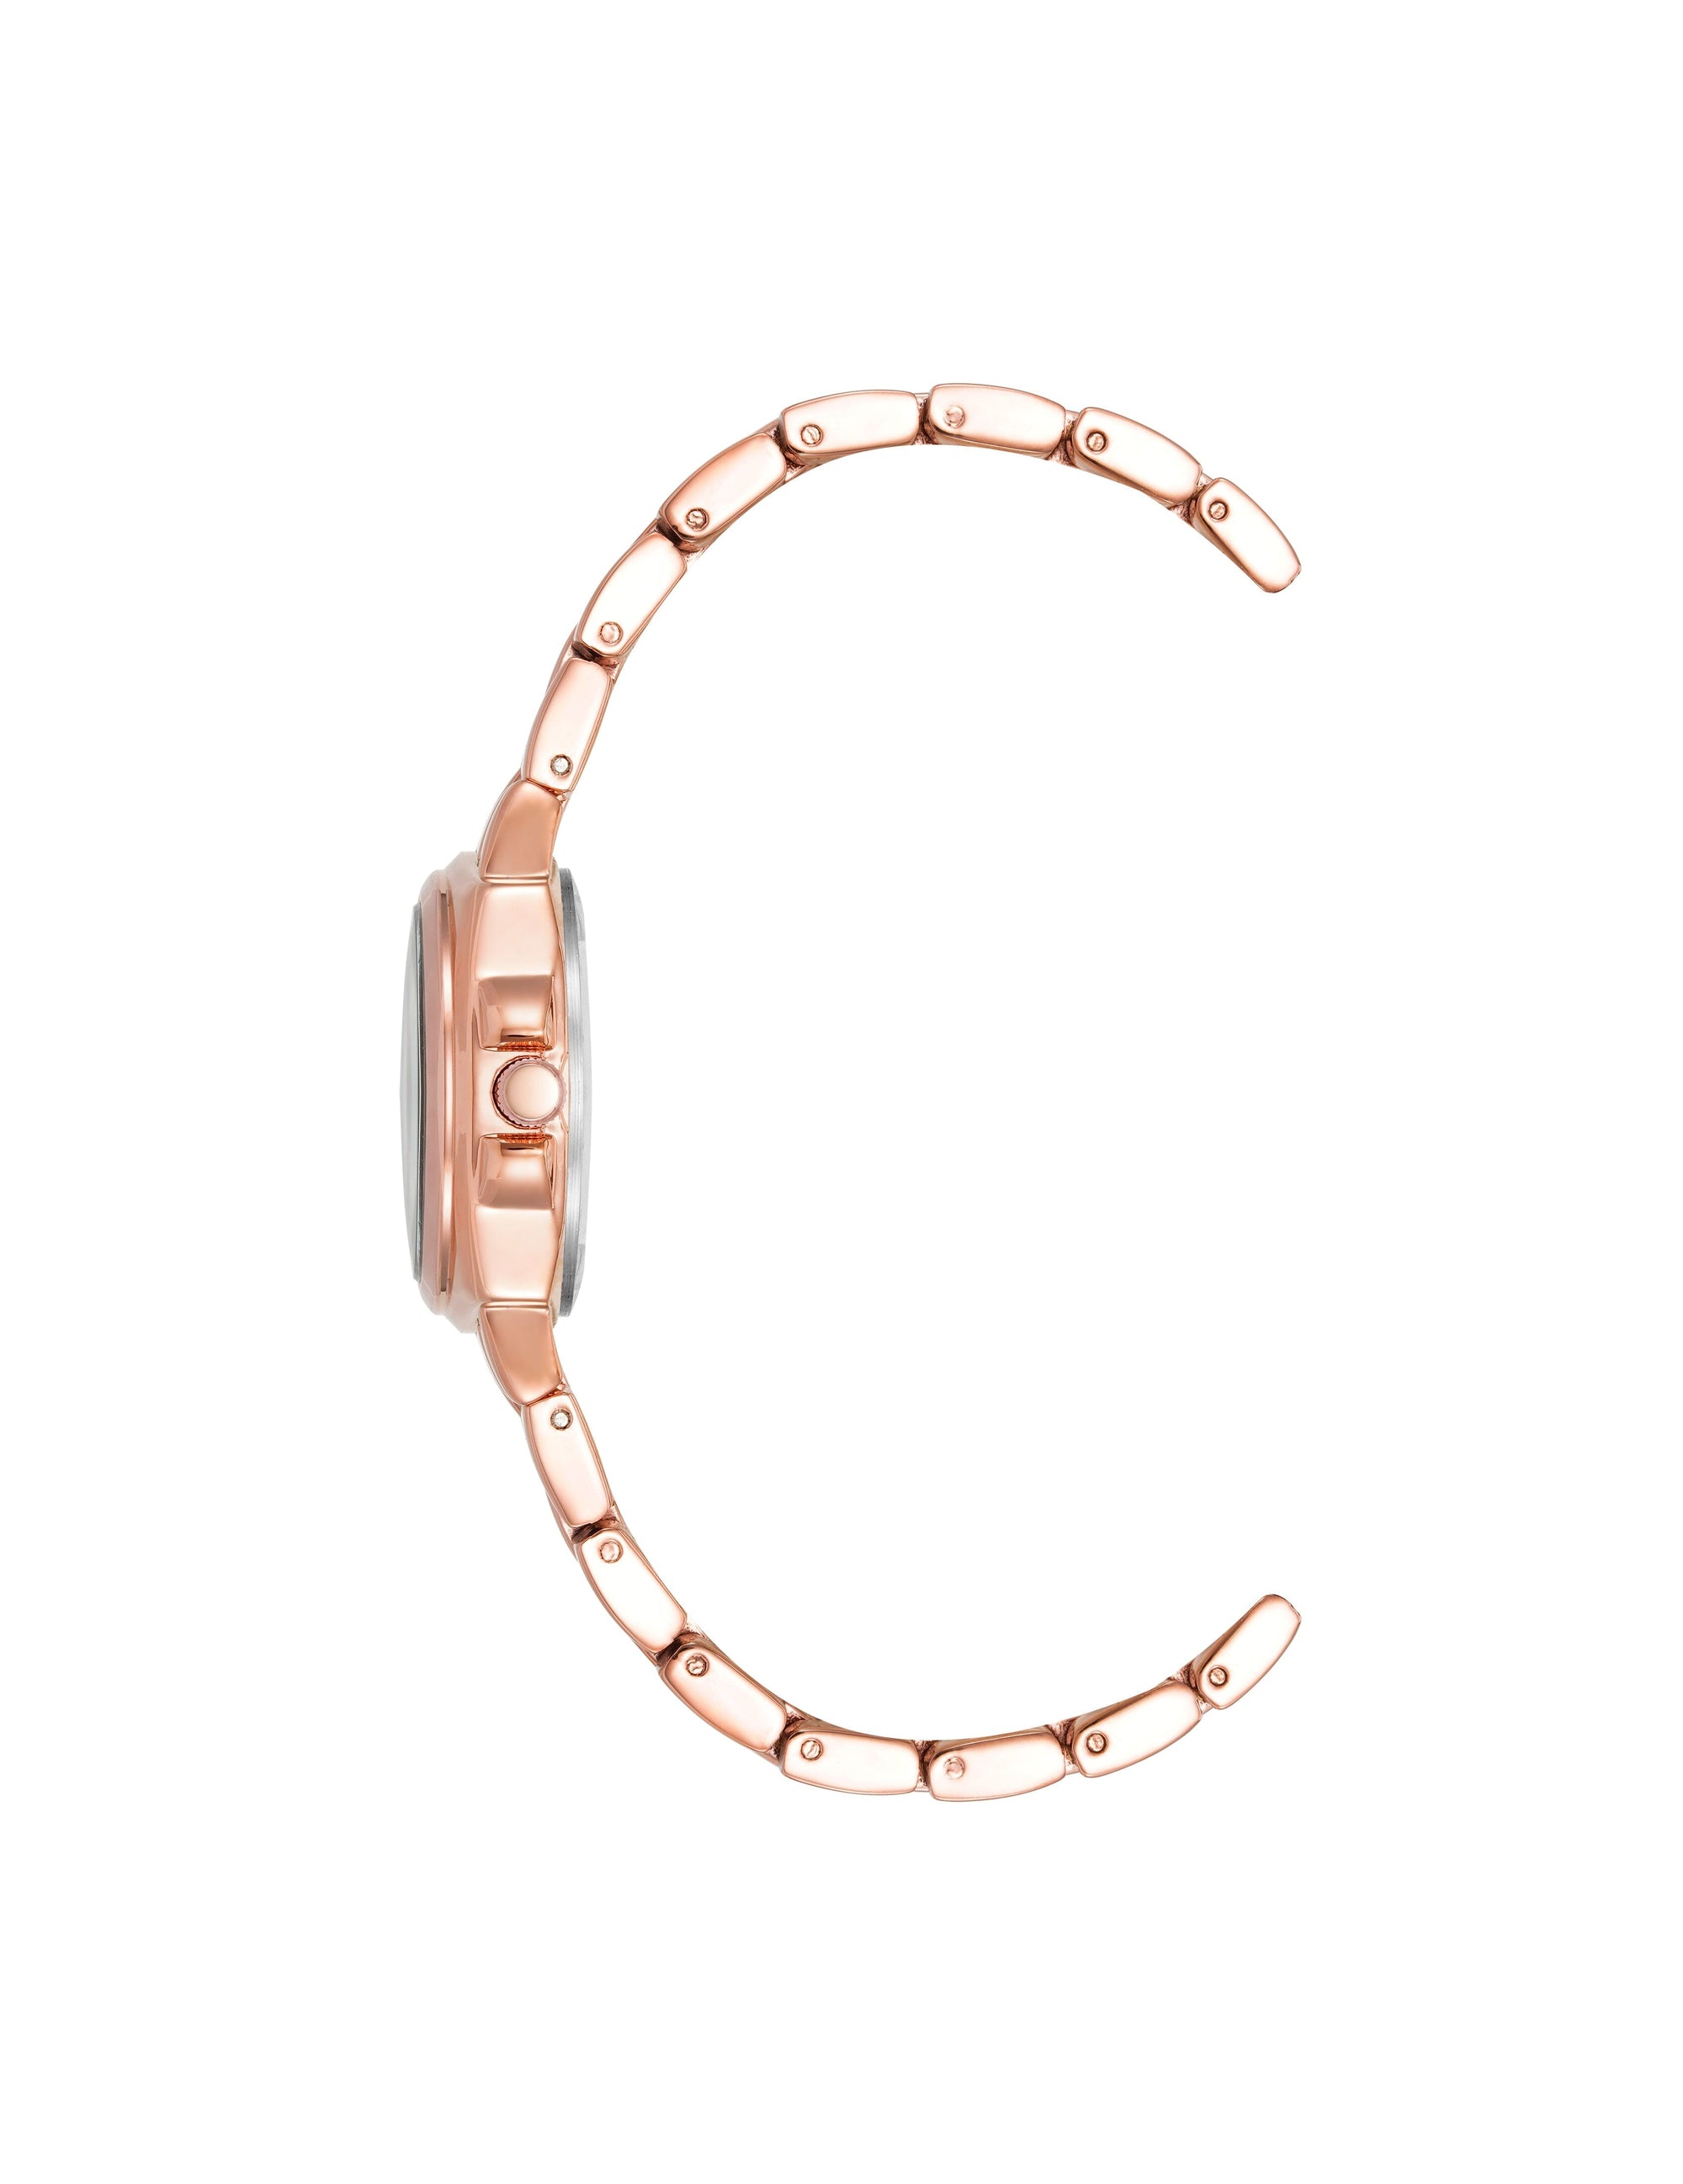 Anne Klein Rose Gold-Tone Cushion Case Bracelet Watch